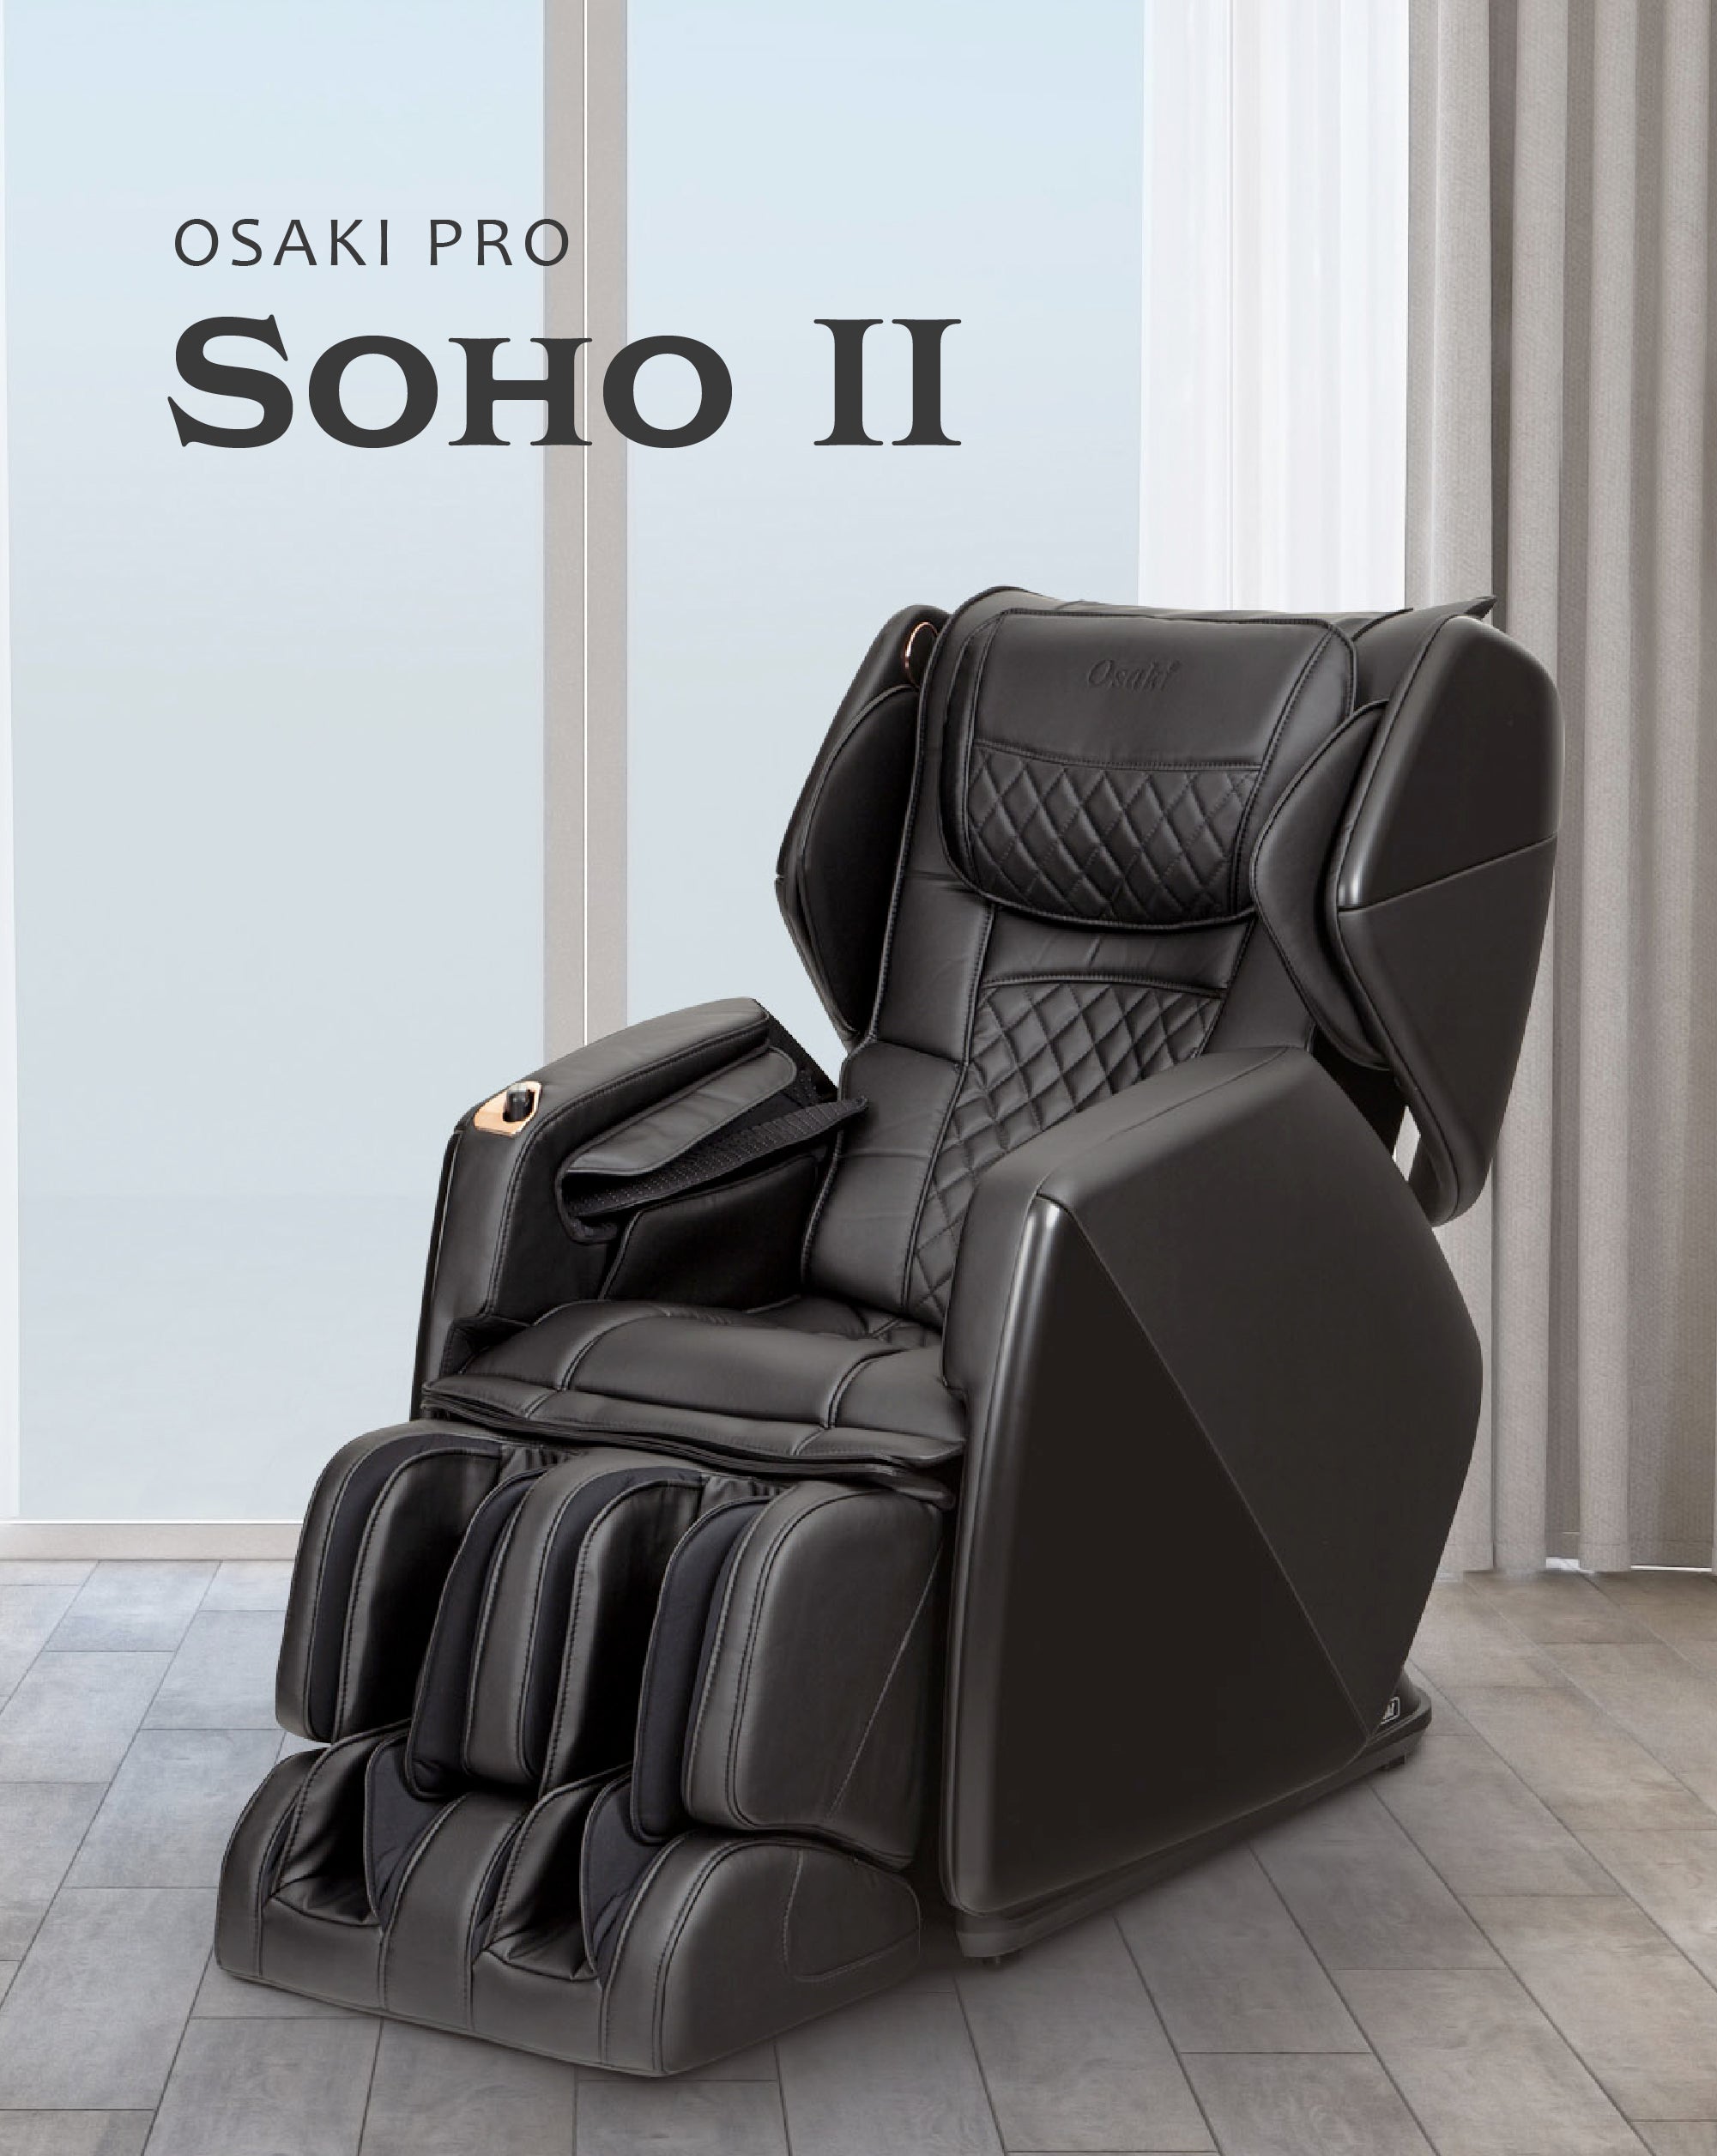 Osaki OS-Pro Soho II Full Body Massage Chair, Overview